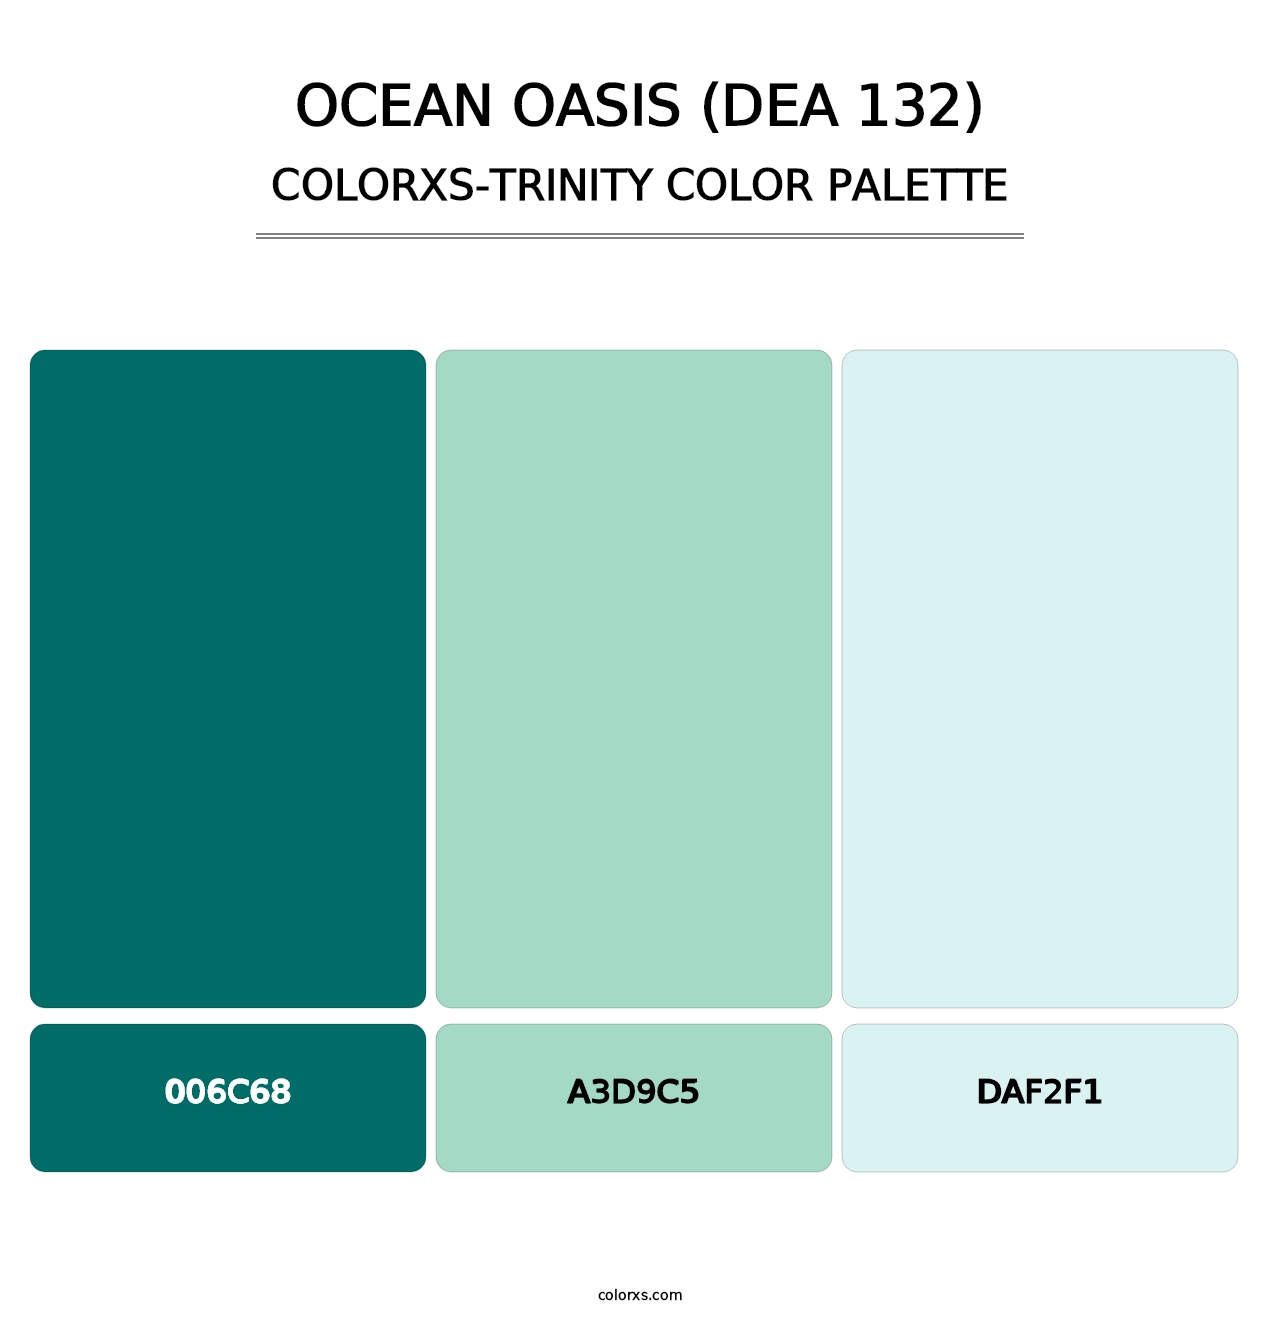 Ocean Oasis (DEA 132) - Colorxs Trinity Palette